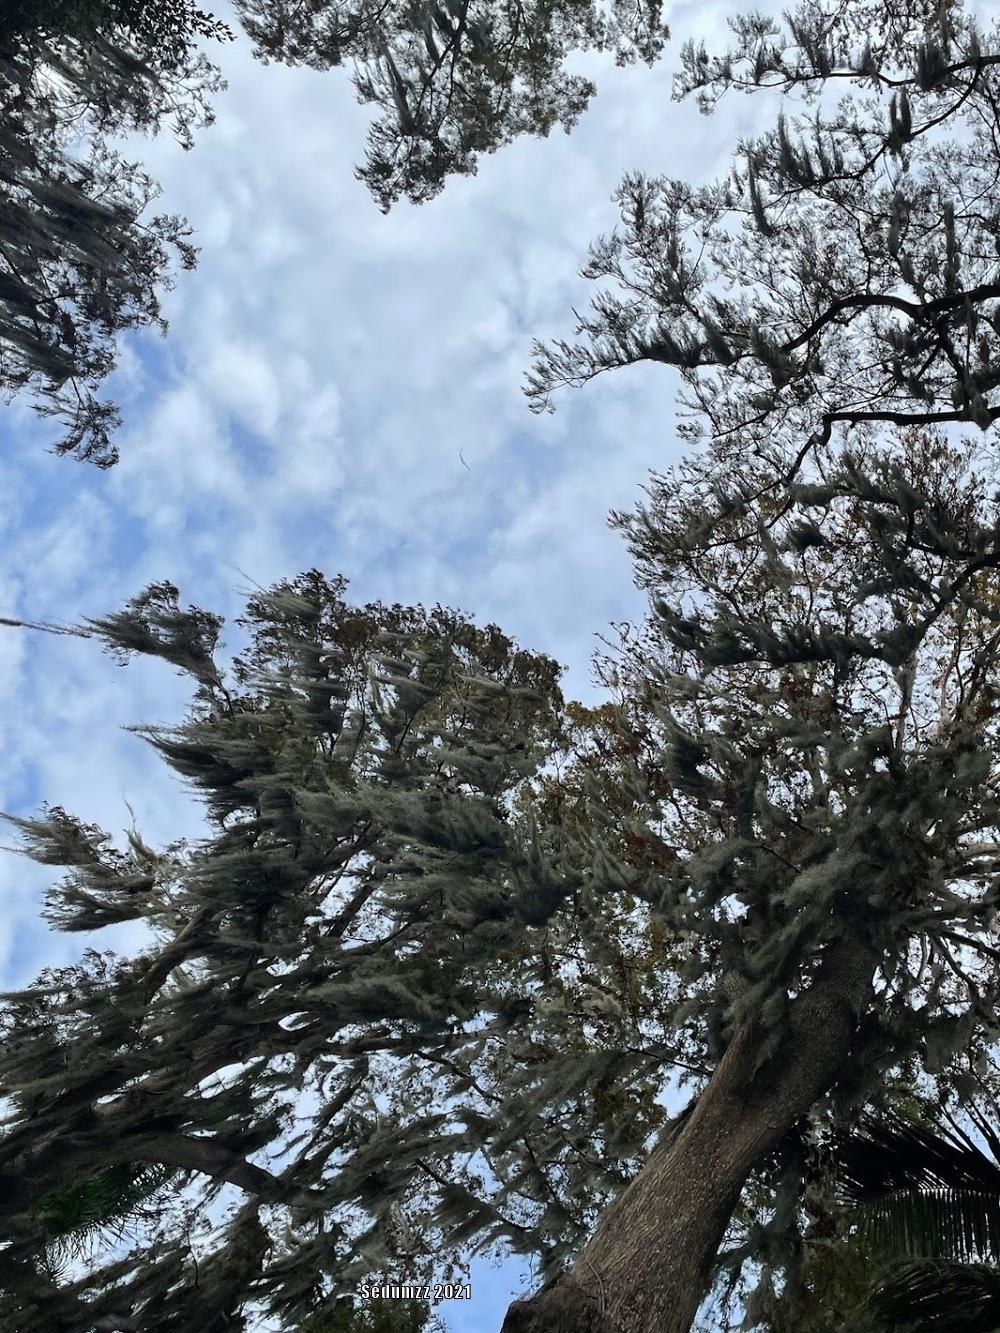 Photo of Bald Cypress (Taxodium distichum) uploaded by sedumzz